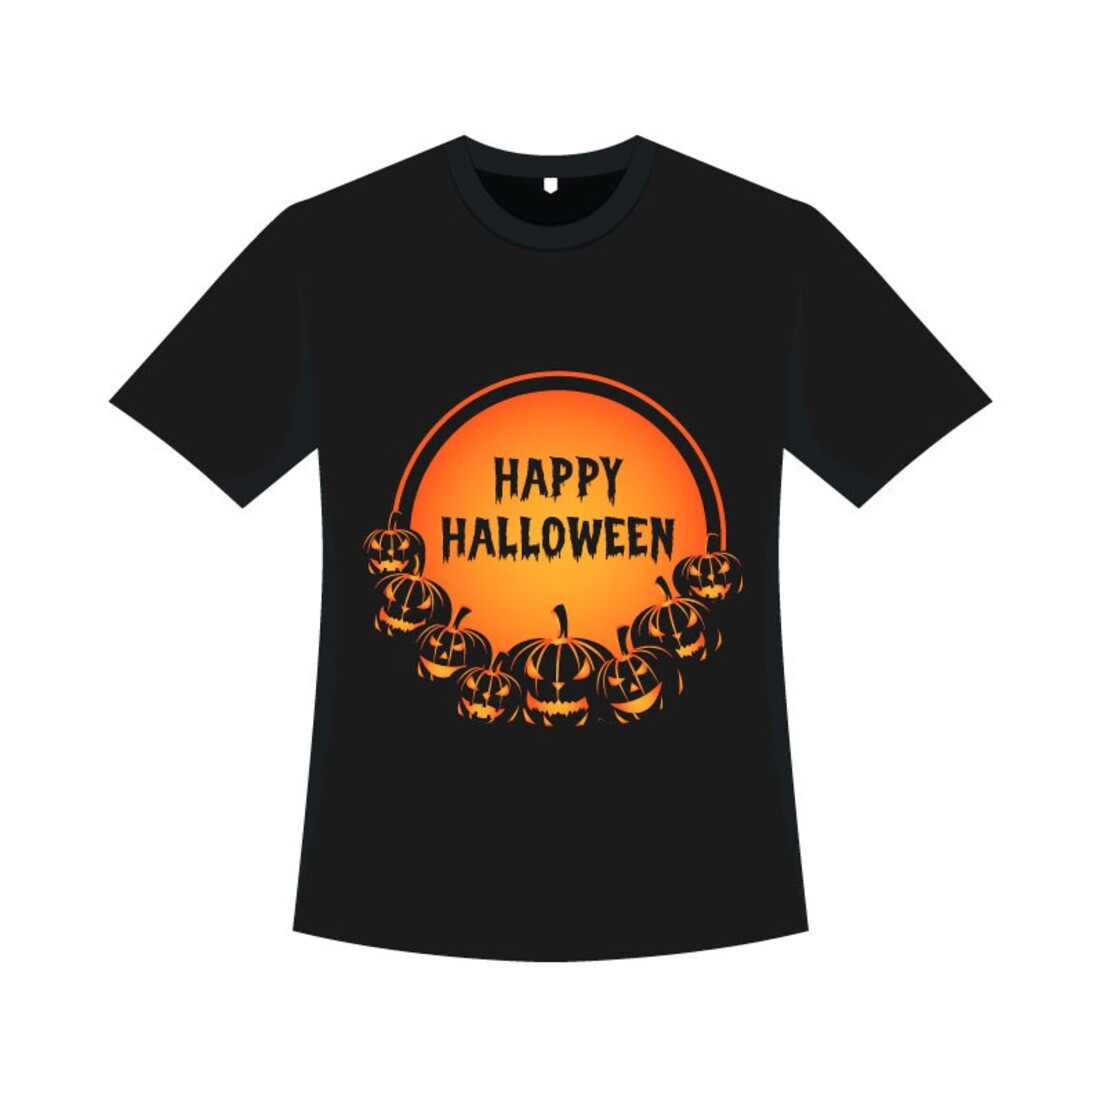 Halloween Stylish T-shirt Vector cover image.